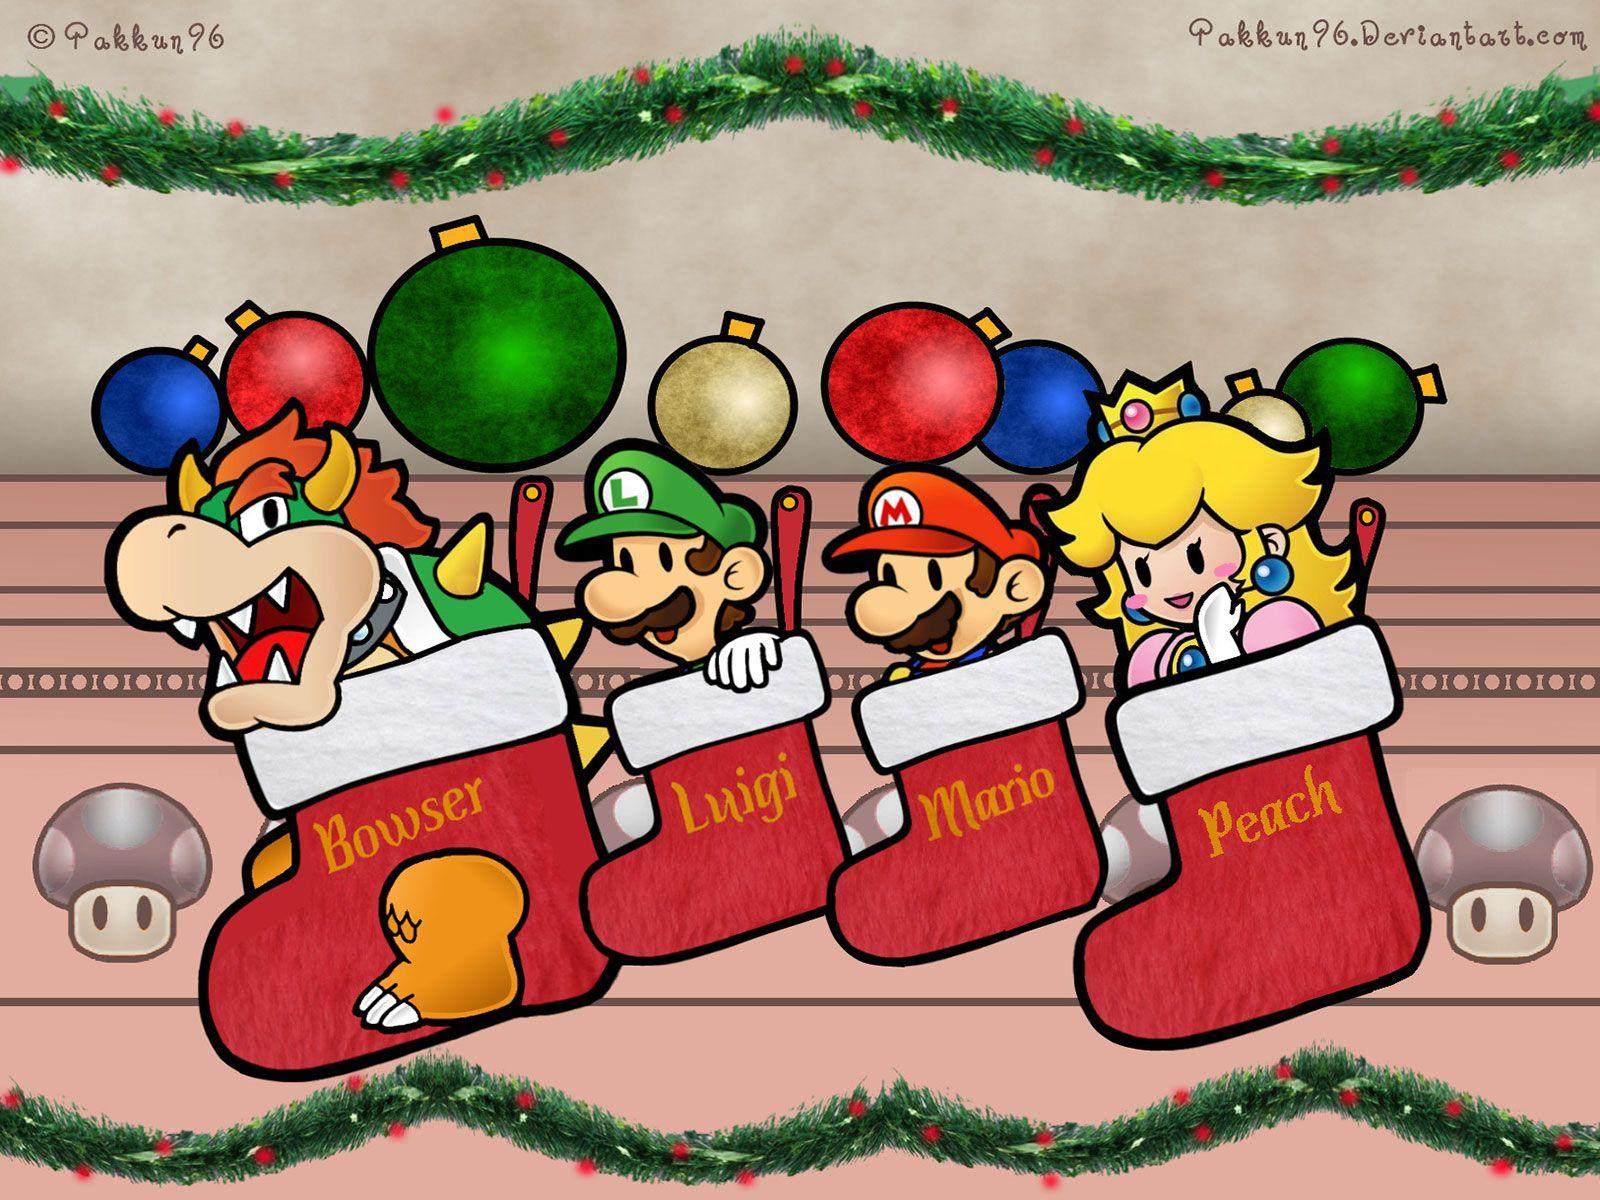 Super Mario Characters In Christmas Socks Wallpaper. Video Game